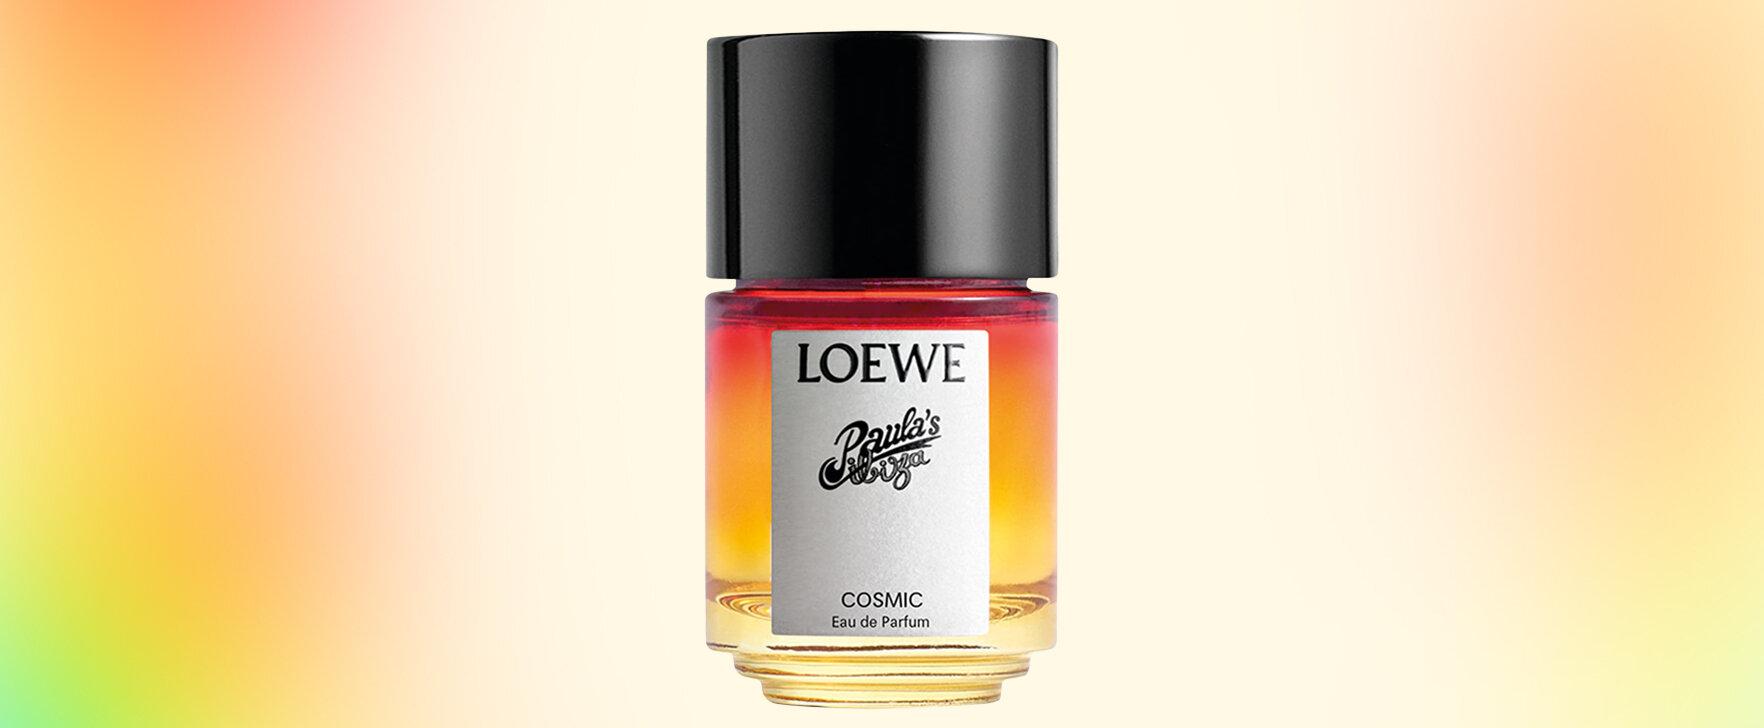 Cosmic Inspiration: The New Eau de Parfum "Paula's Ibiza Cosmic" by Loewe